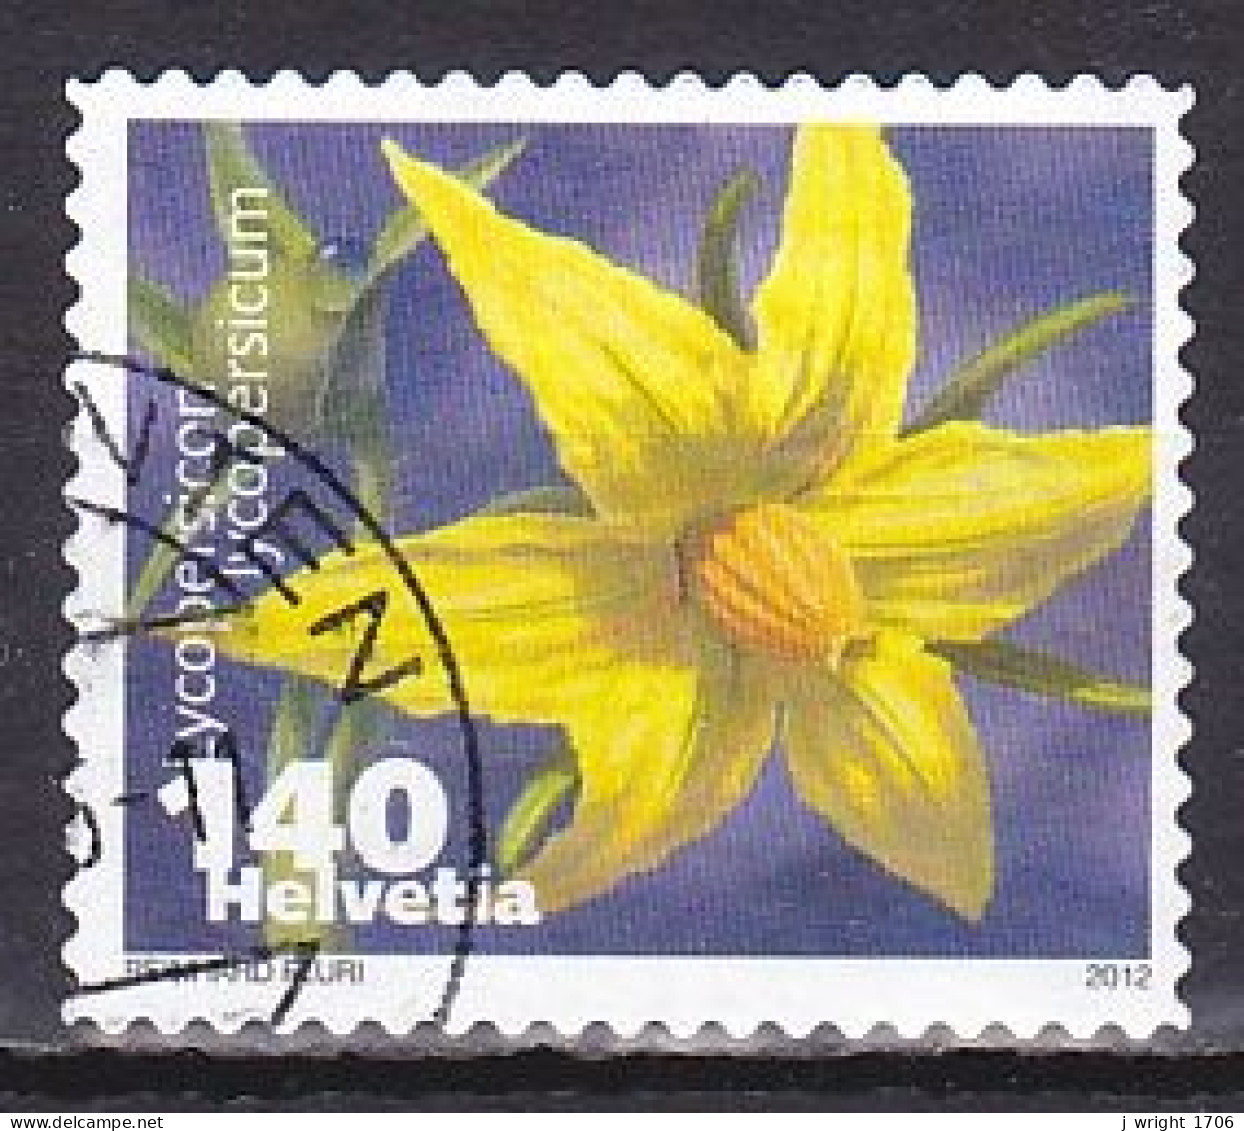 Switzerland, 2012, Vegetable Flowers/Tomato, 140c, USED - Used Stamps